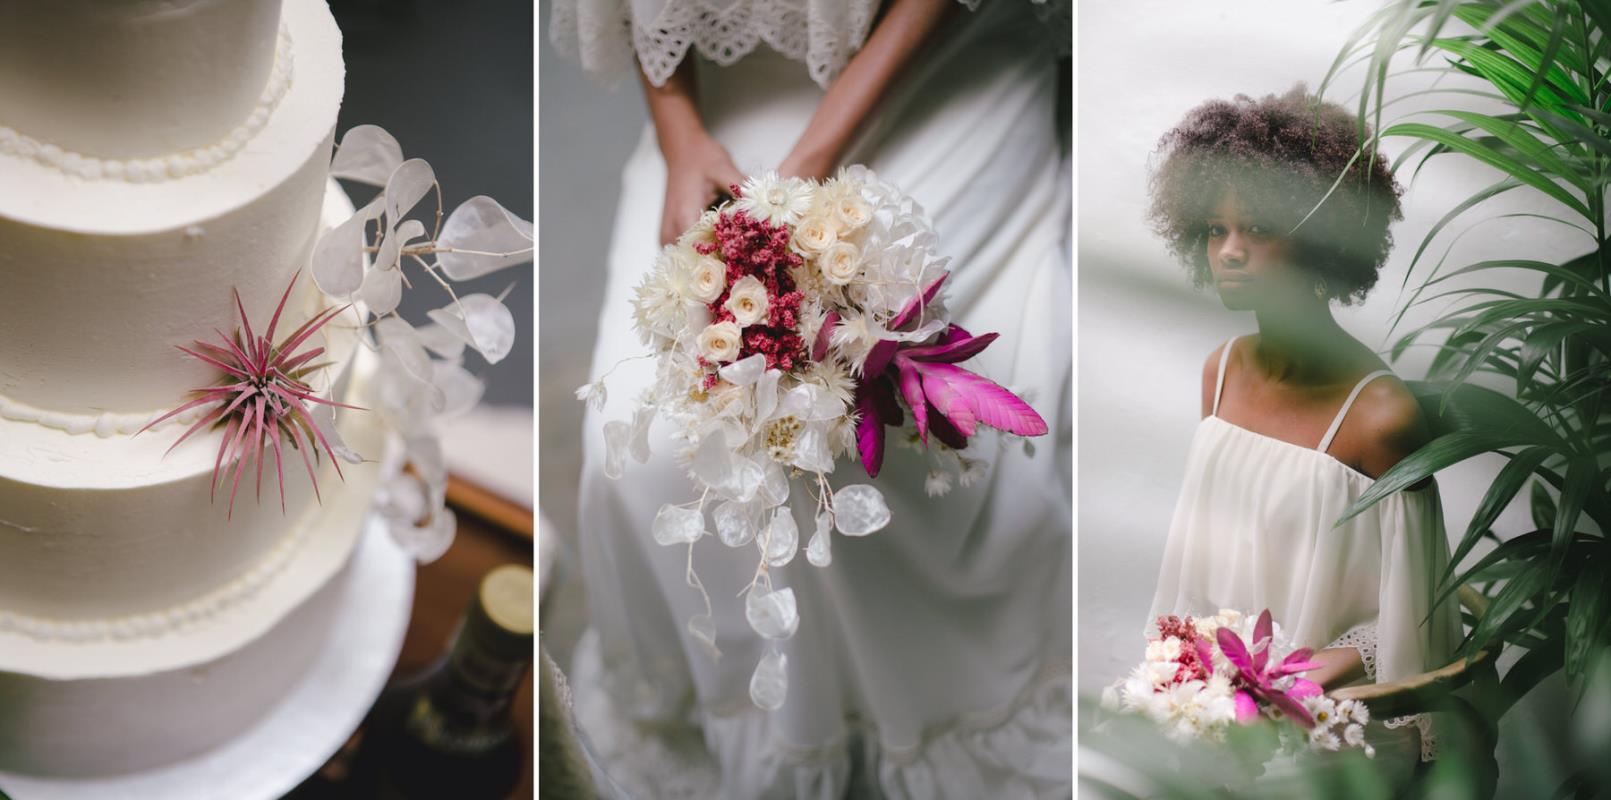 Alternative Weddings Styled Shoot | Laura Stramacchia | Wedding Photography